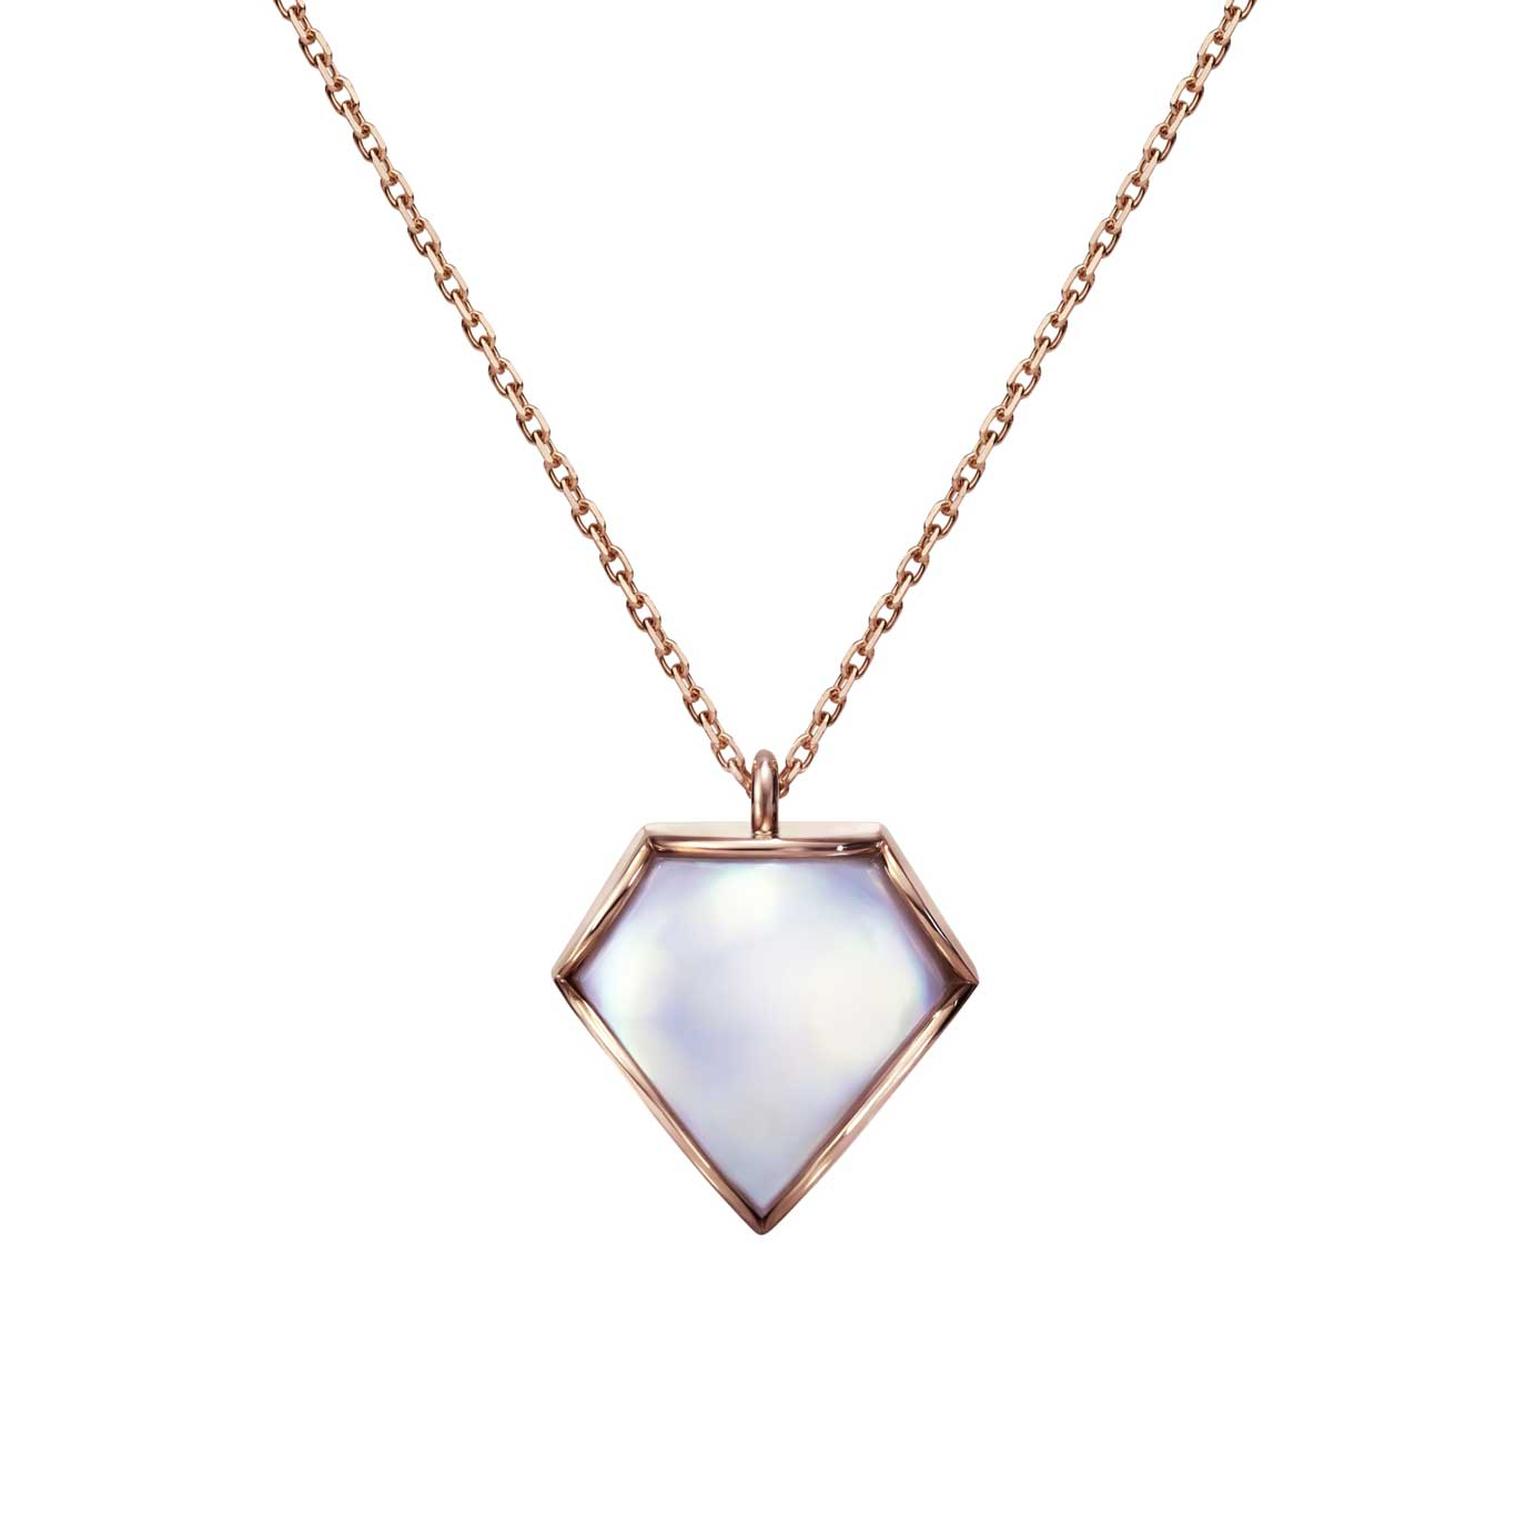 M/G Tasaki Sakura Gold Faceted pendant with mabe pearl